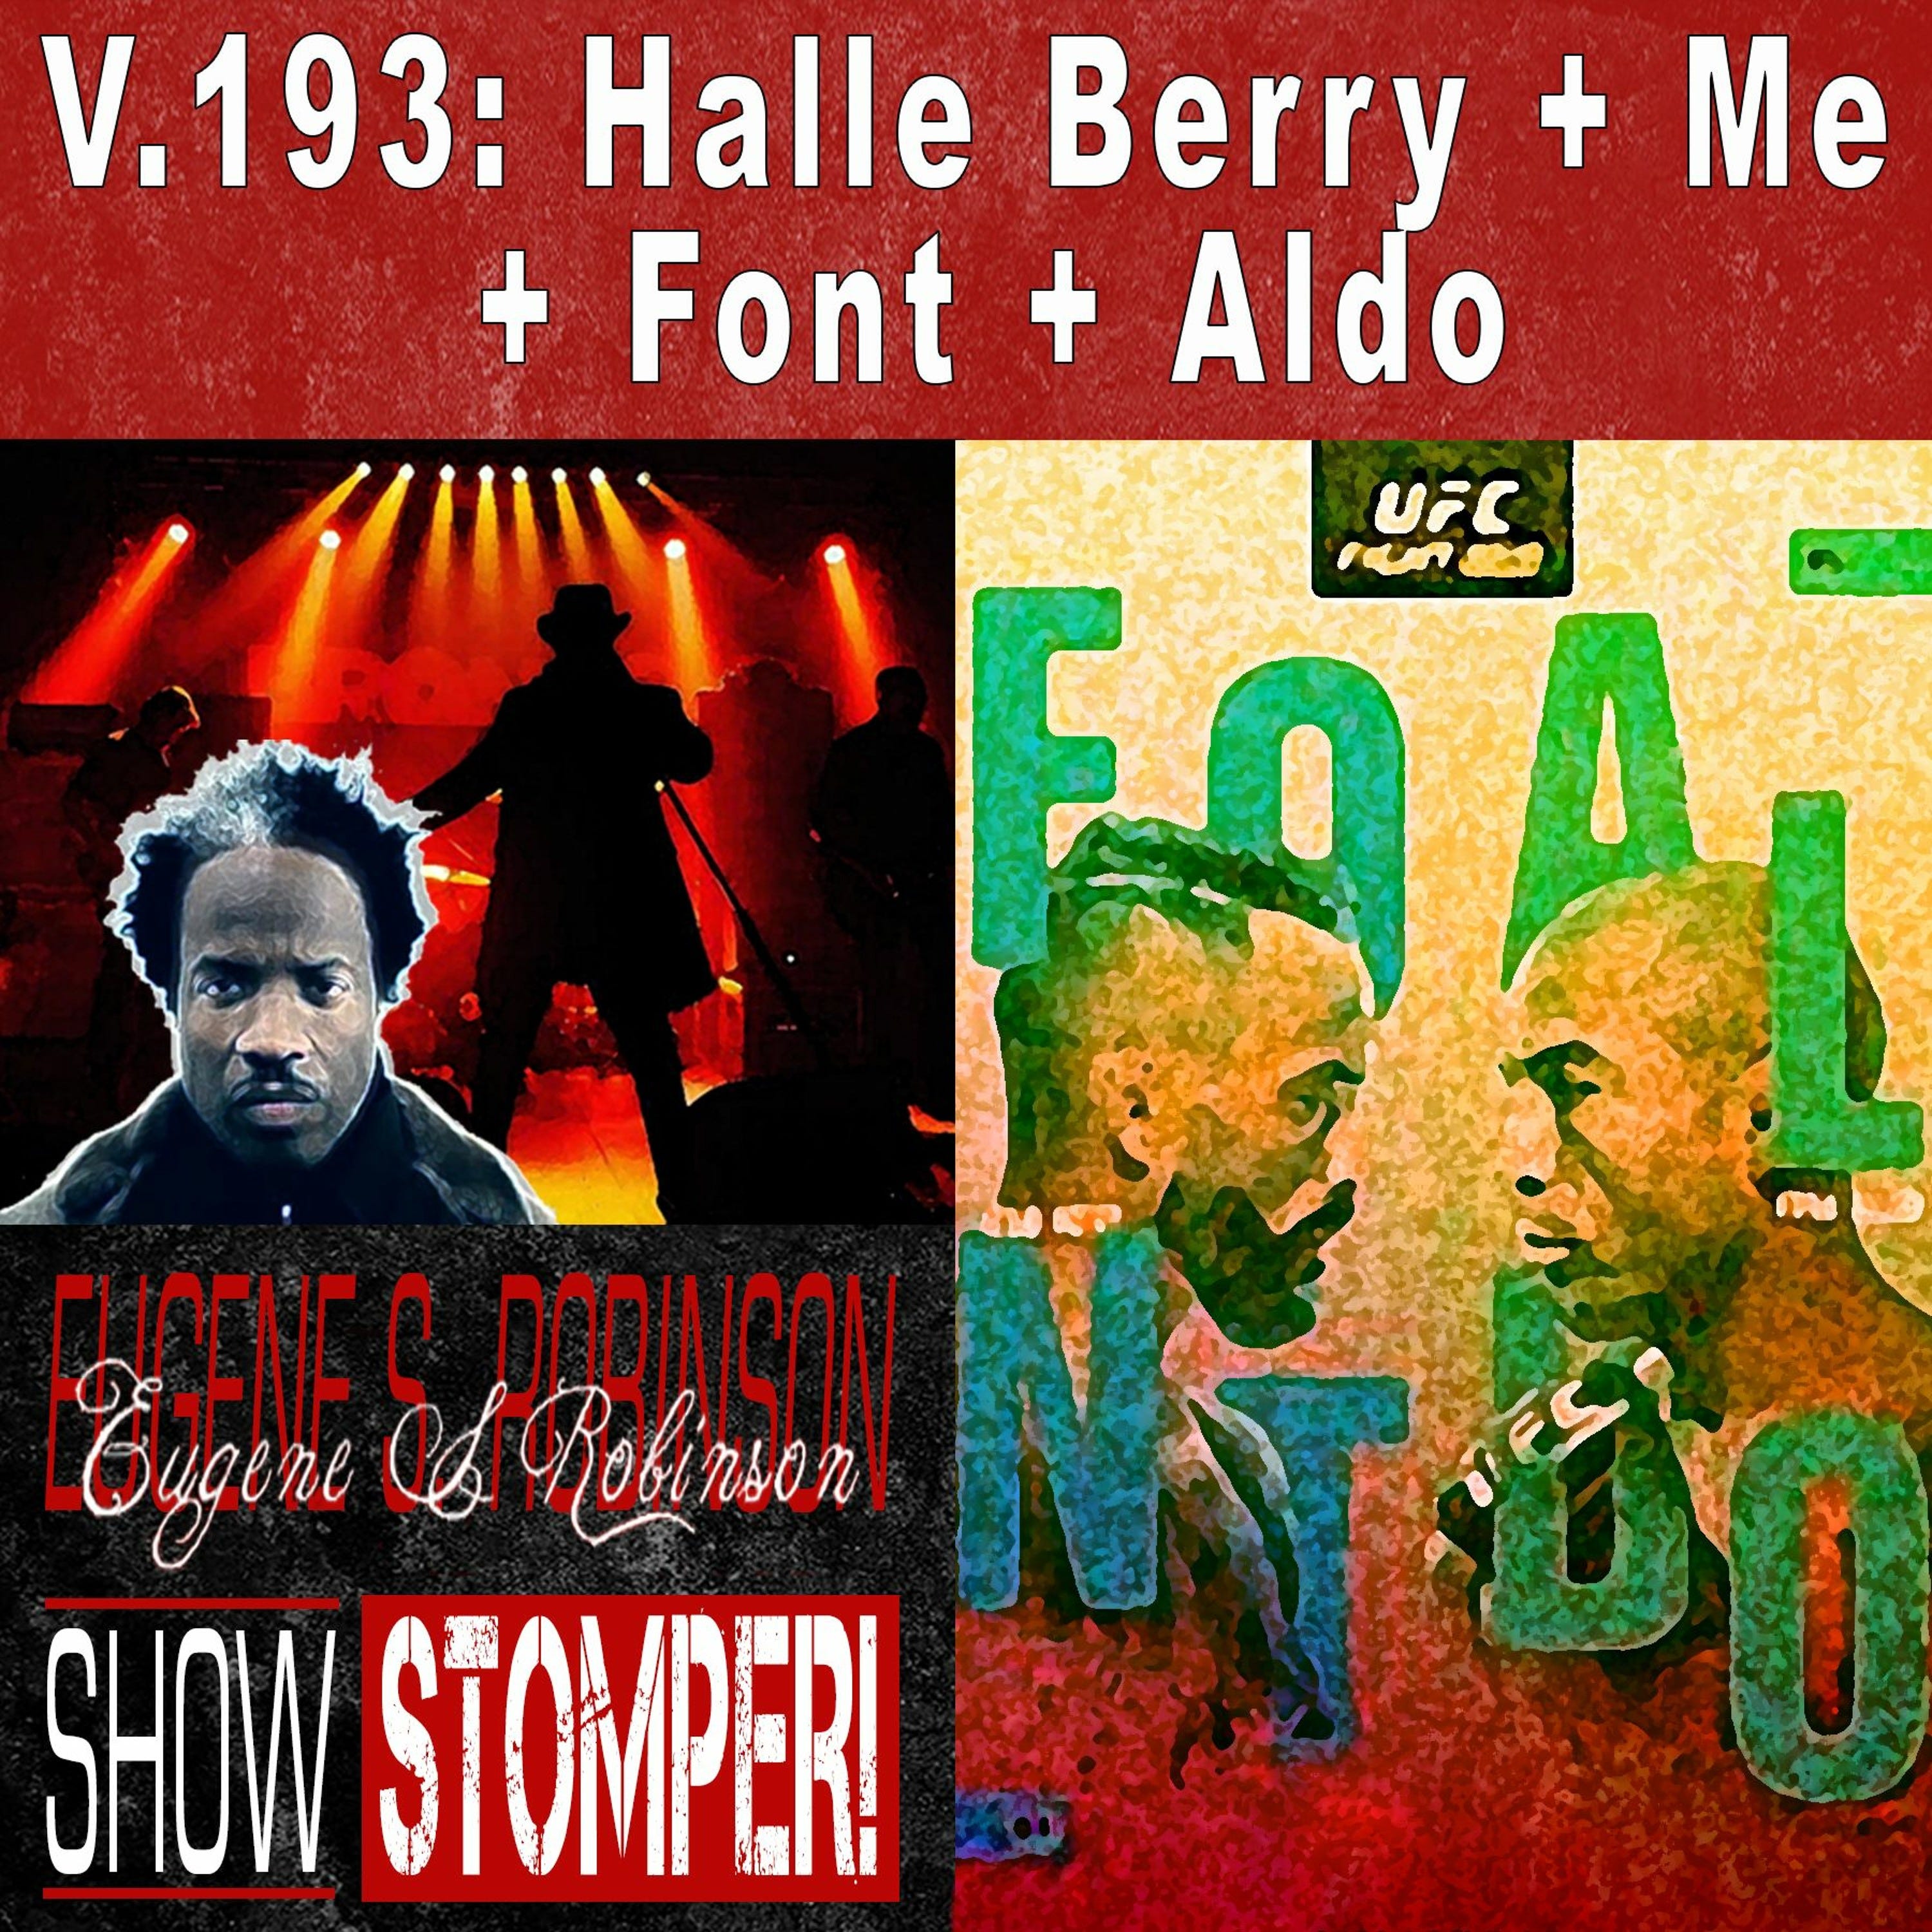 V.193 Halle Berry + Me + Font + Aldo On The Eugene S. Robinson Show Stomper!